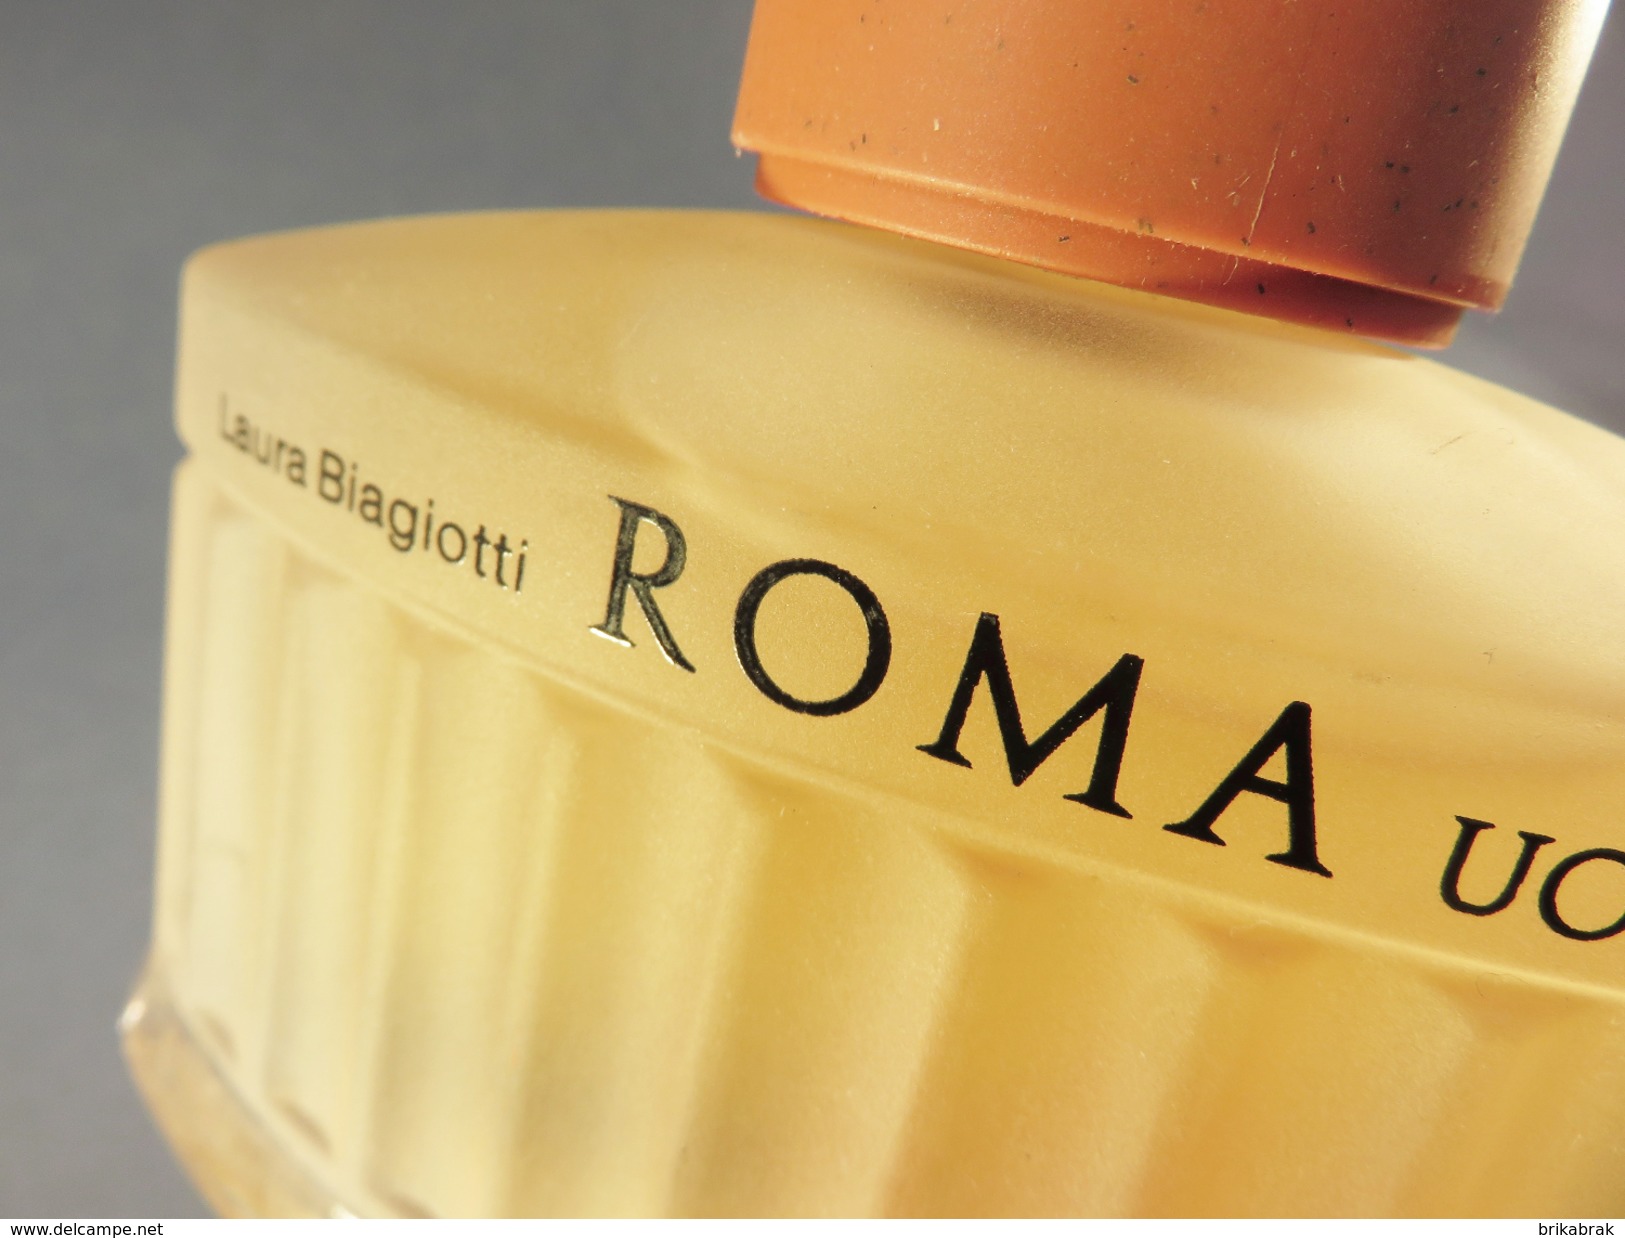 FLACON FACTICE ROMA LAURA BIAGOTTI + Mode Flacon Bouteille Rome PLV Parfum Parfumerie - Voorbeeldflesje